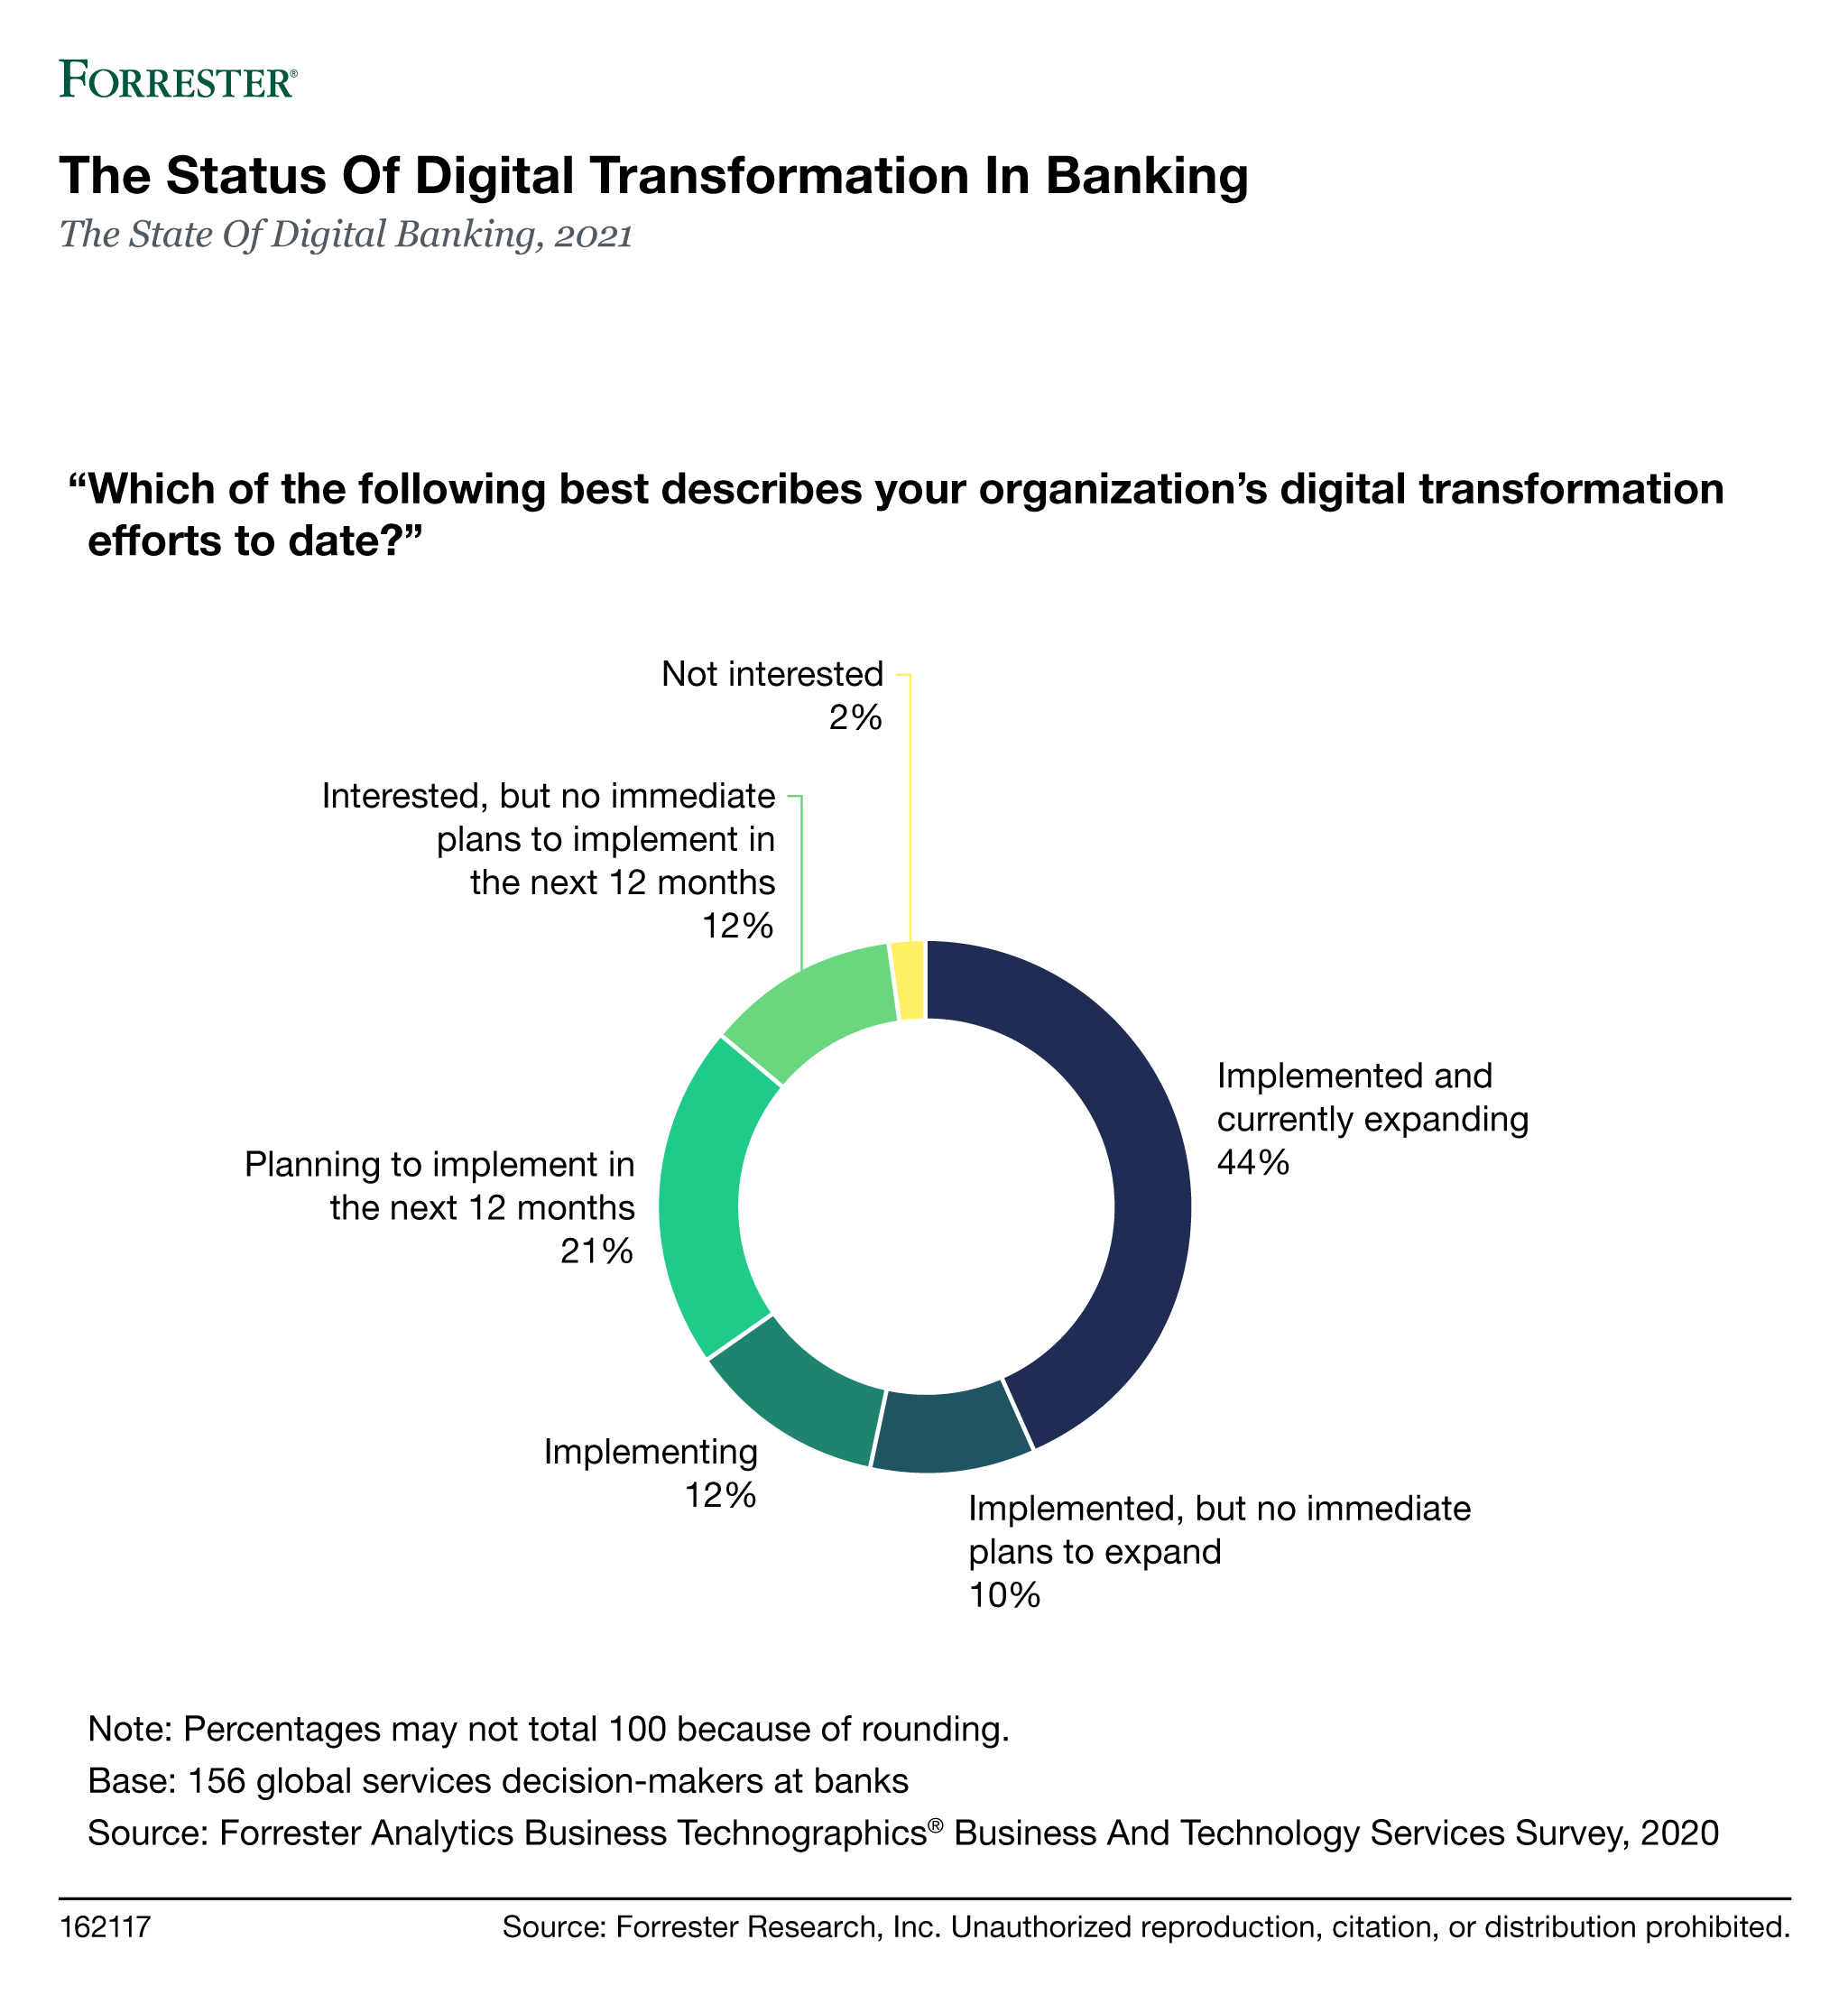 In 2021, Banks Must Sustain The Digital Momentum